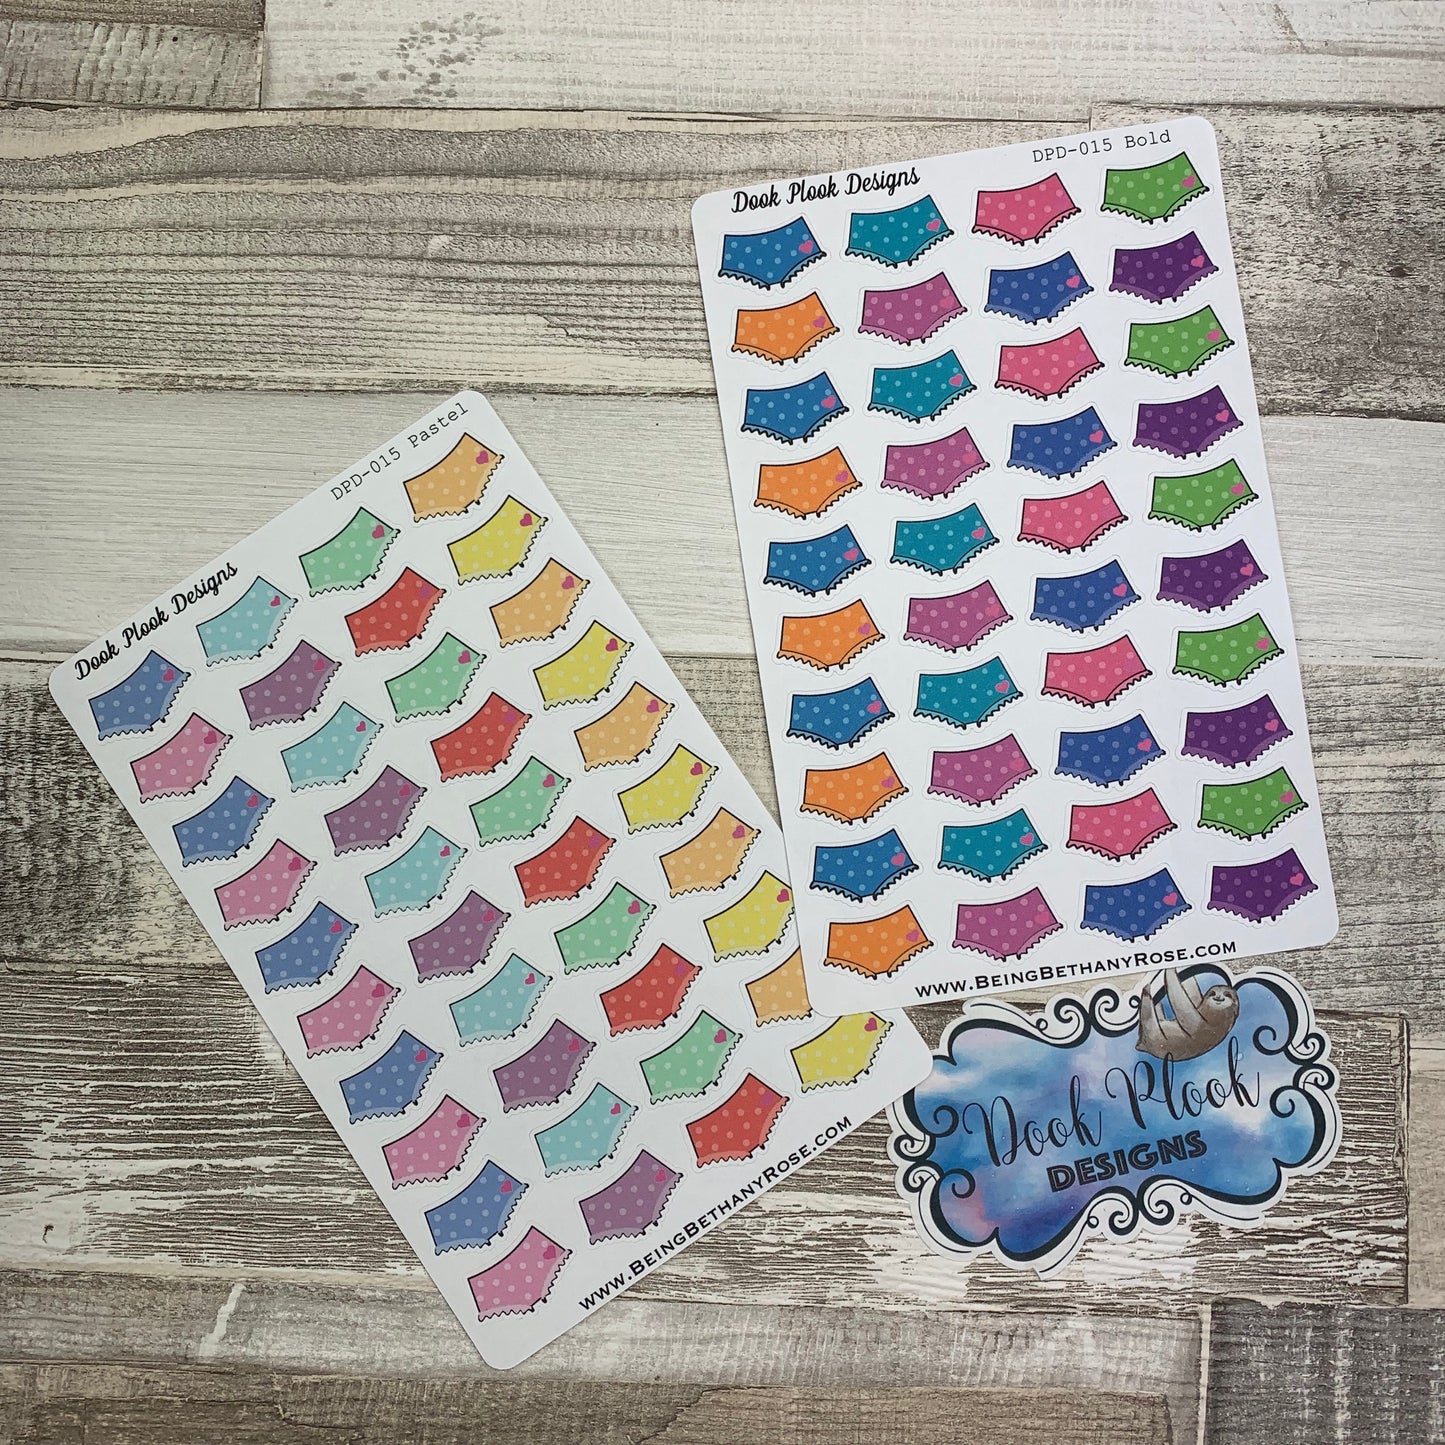 Period tracker knicker stickers (DPD015)